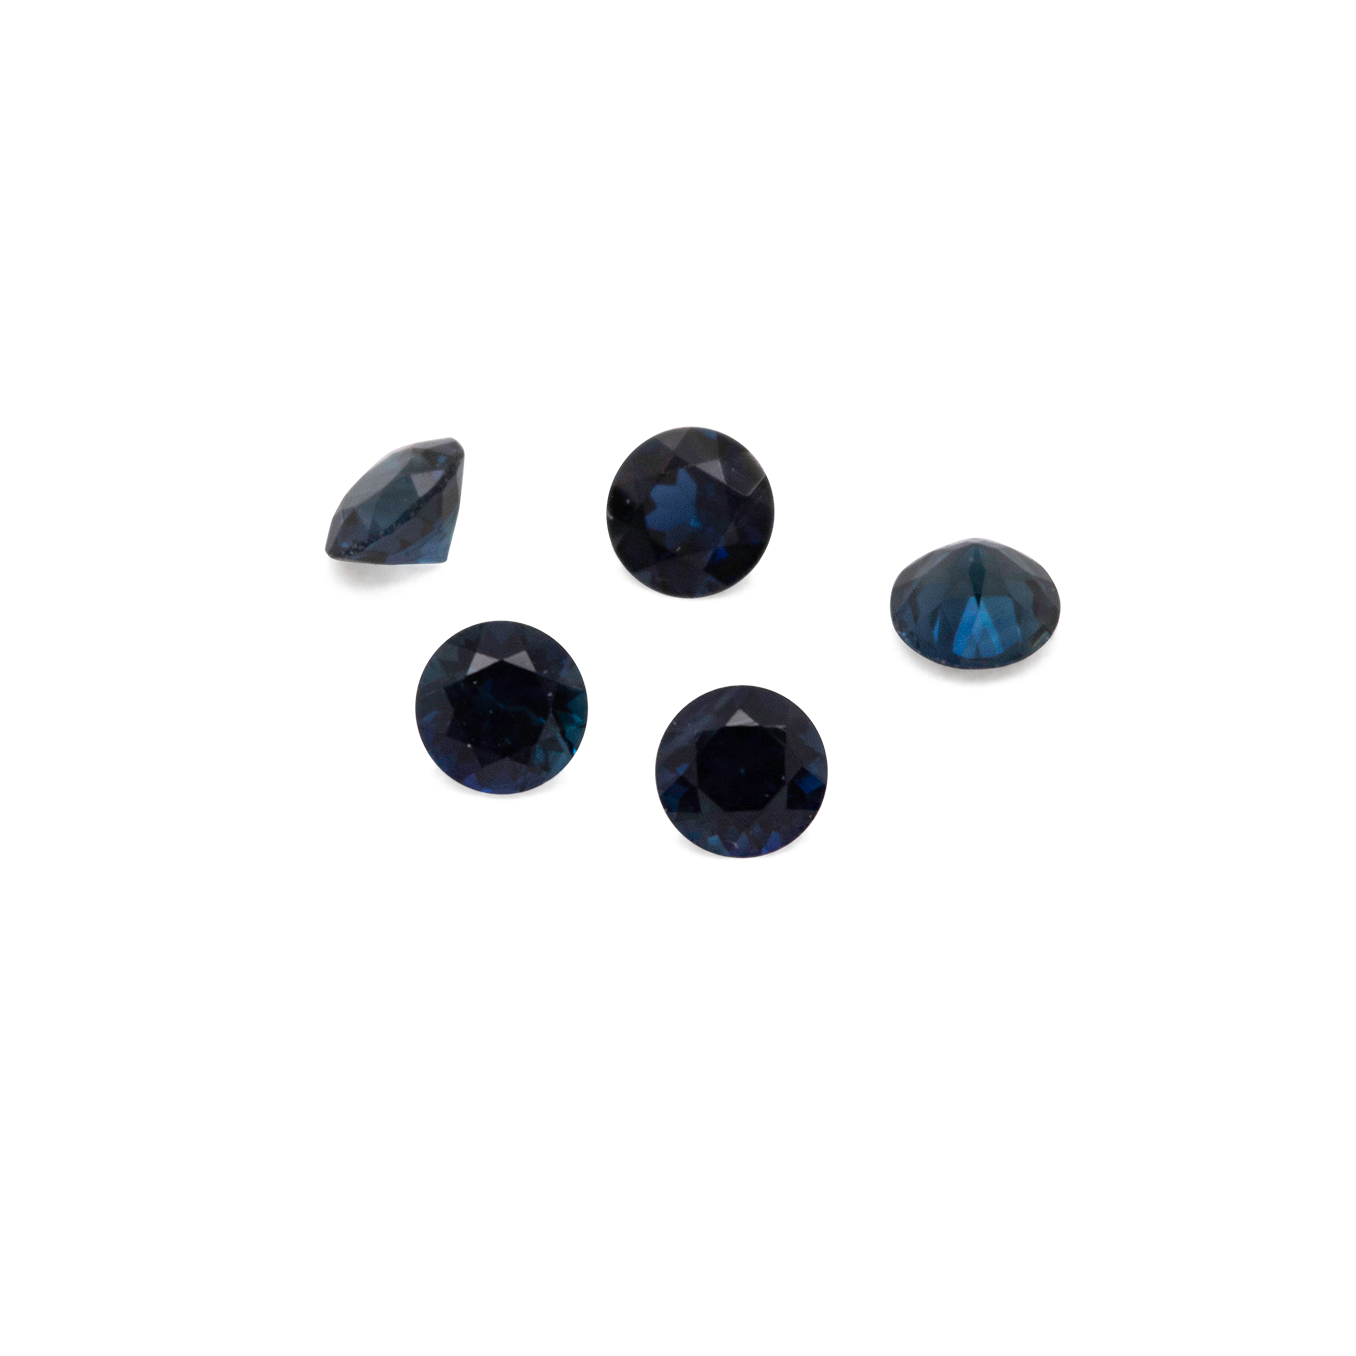 Saphir - dunkel blau, rund, 1,5x1,5 mm, ca. 0,016 cts, Nr. XSR11143